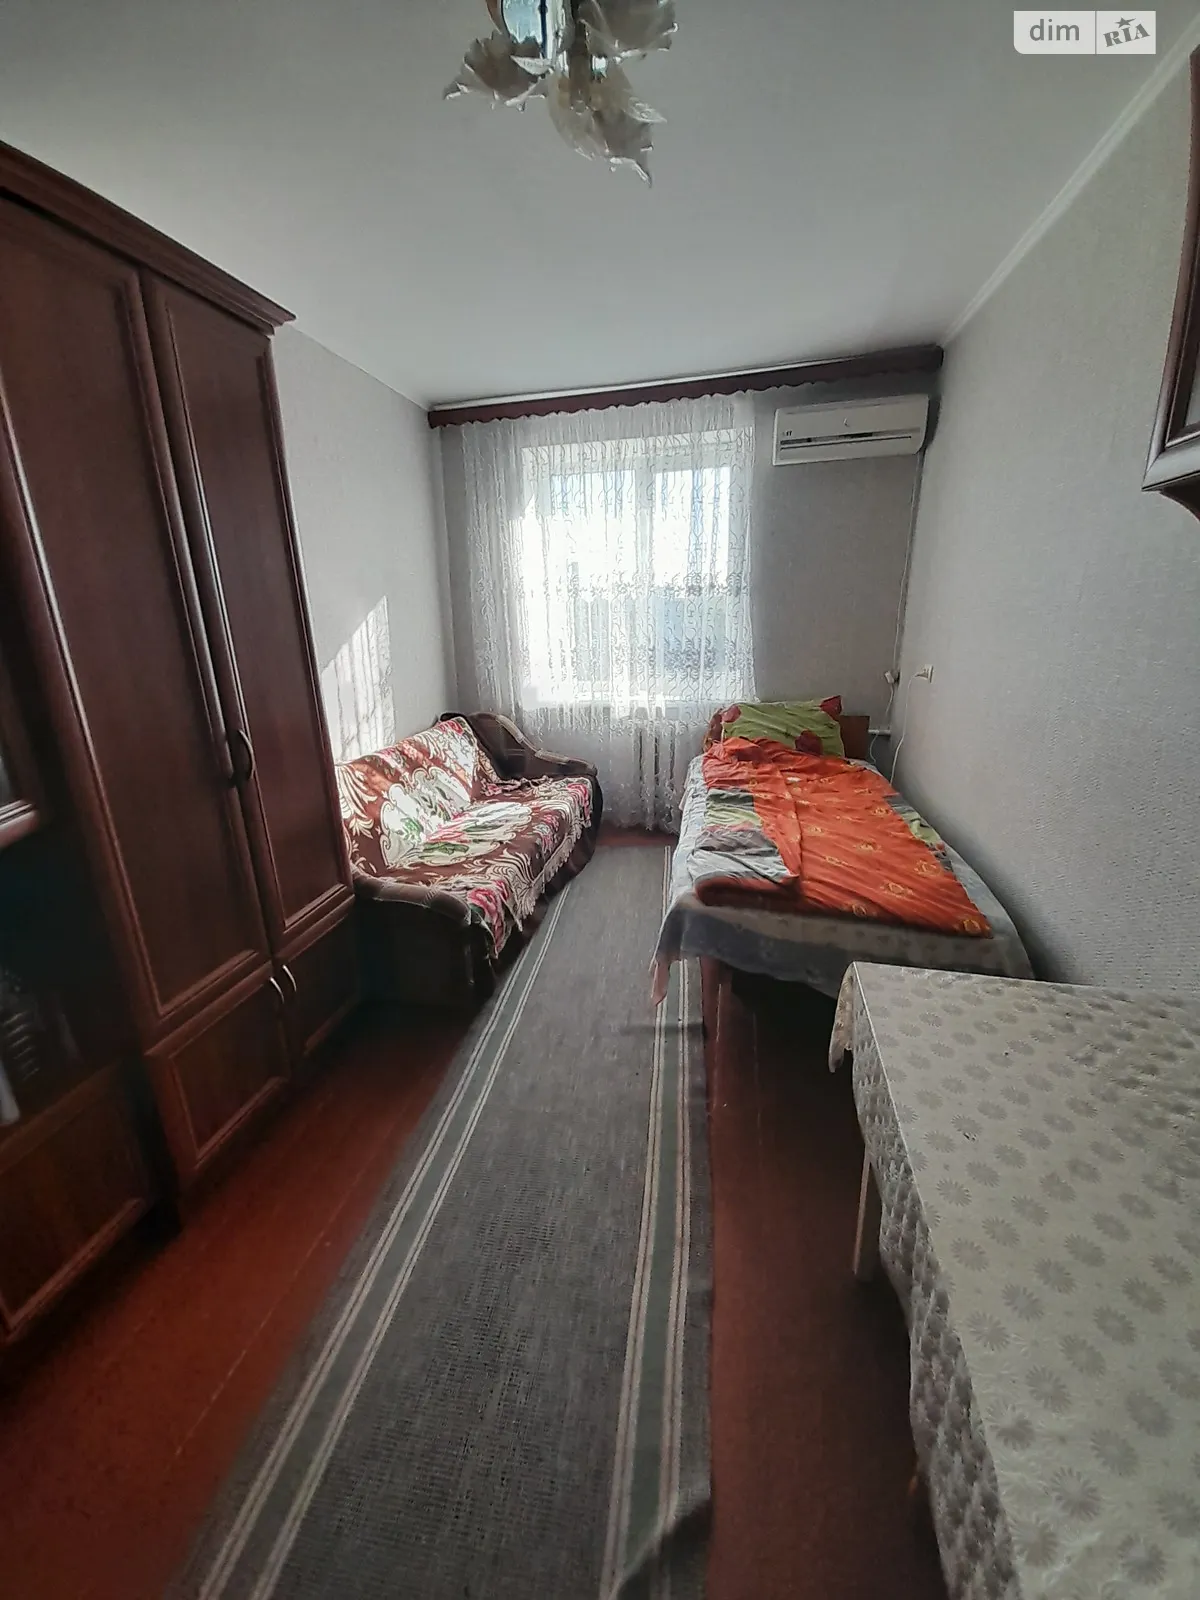 Продается комната 17 кв. м в Ровно - фото 3